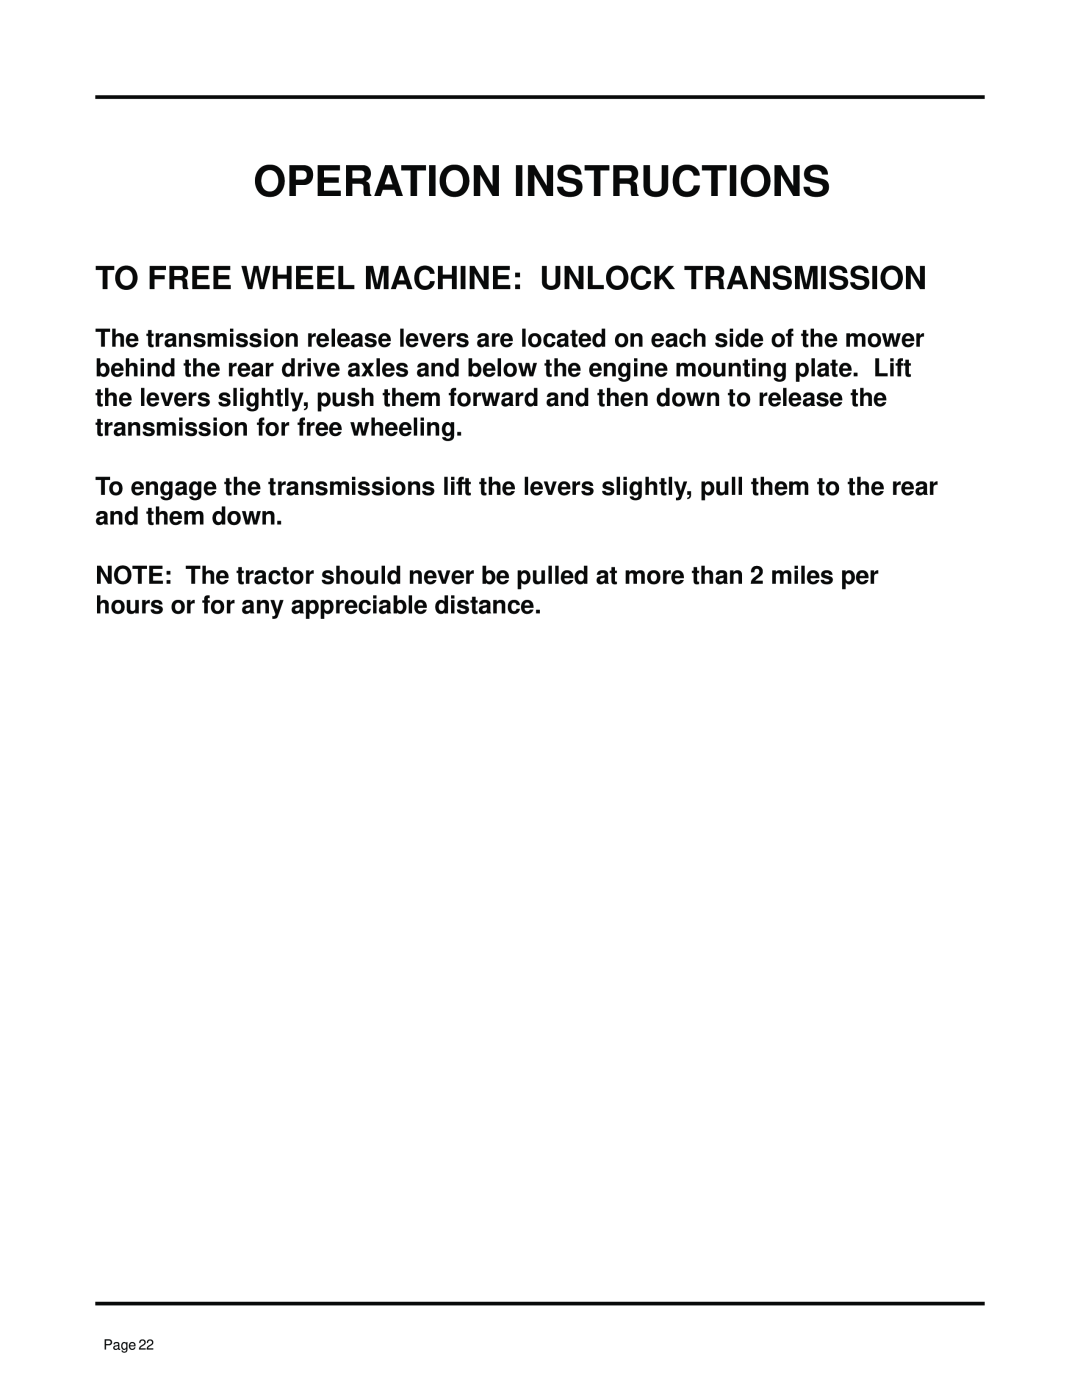 Dixon ZTR 7025, 13091-0500 manual To Free Wheel Machine Unlock Transmission, Operation Instructions 